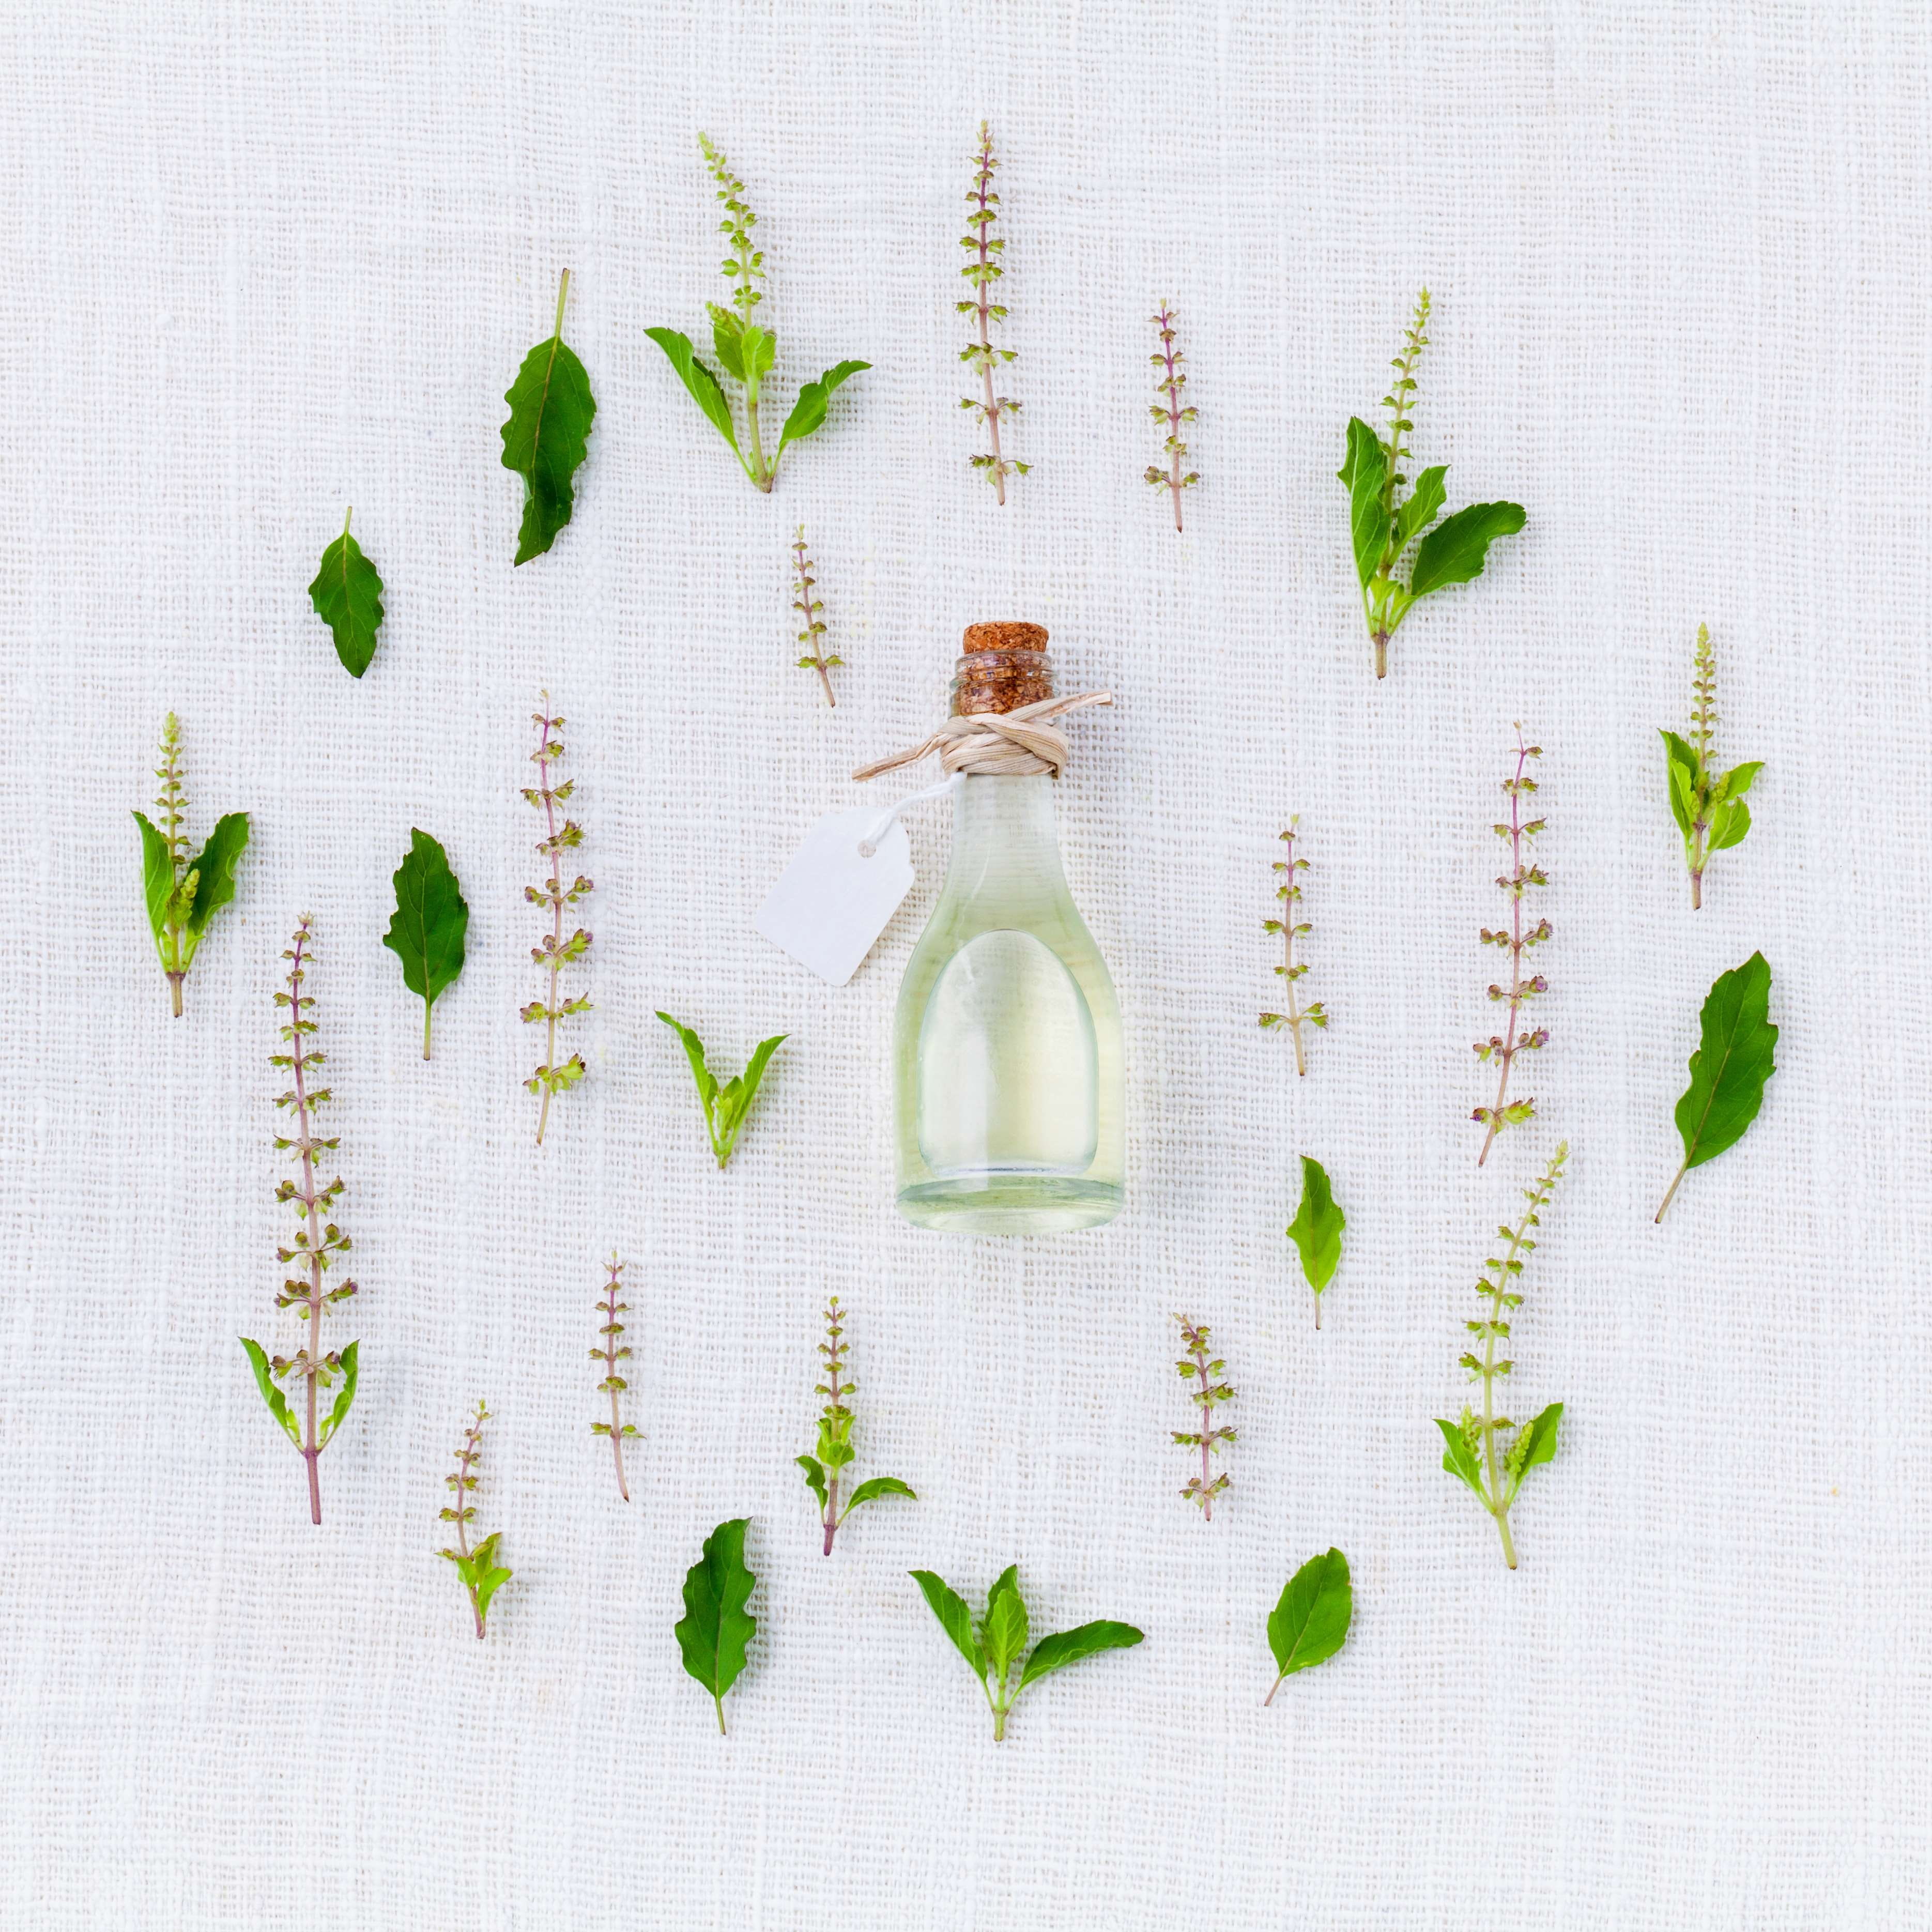 alternative, aroma, aromatherapy, aromatic, asia, background